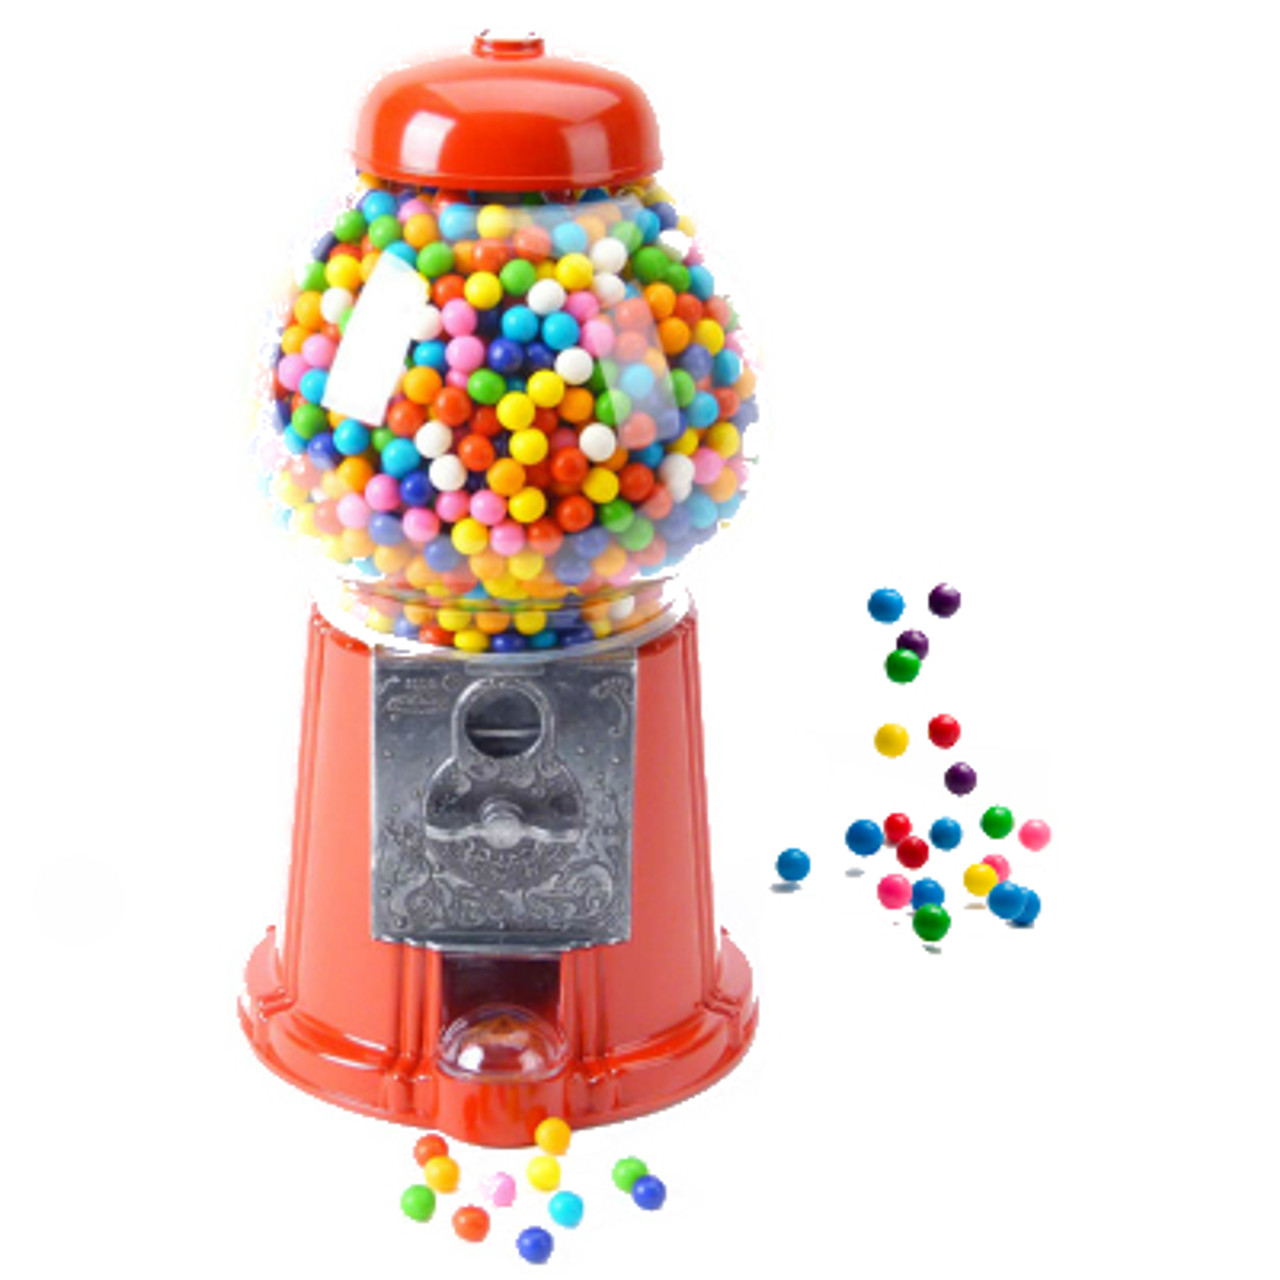 50 Original Bubble Gum Machines w/ Stands